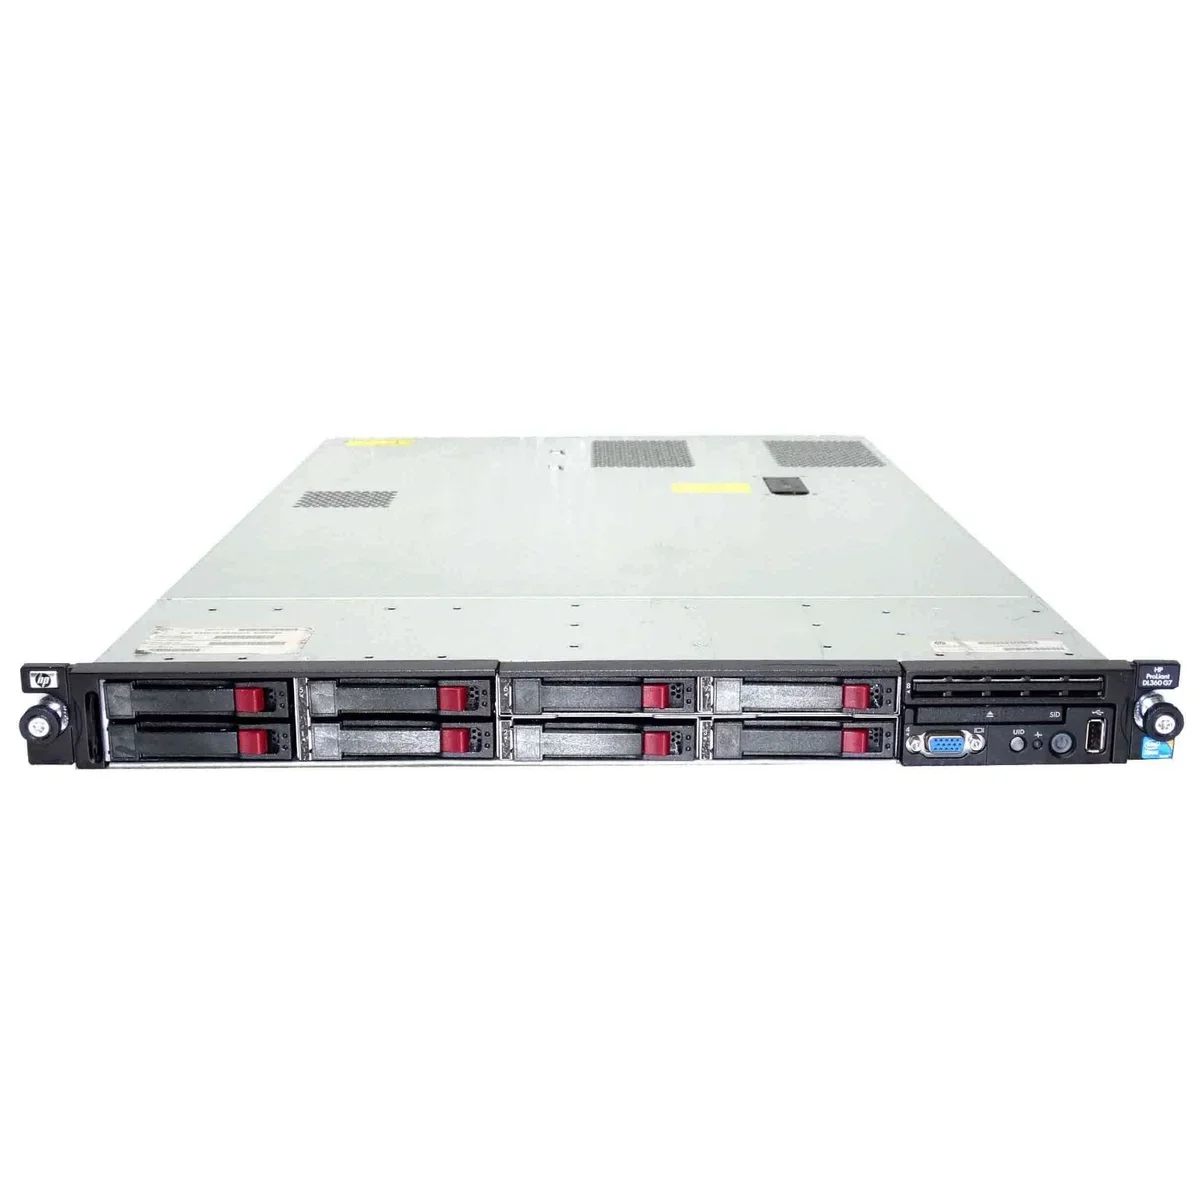 HPE ProLiant DL360 G7 1U Rack Server